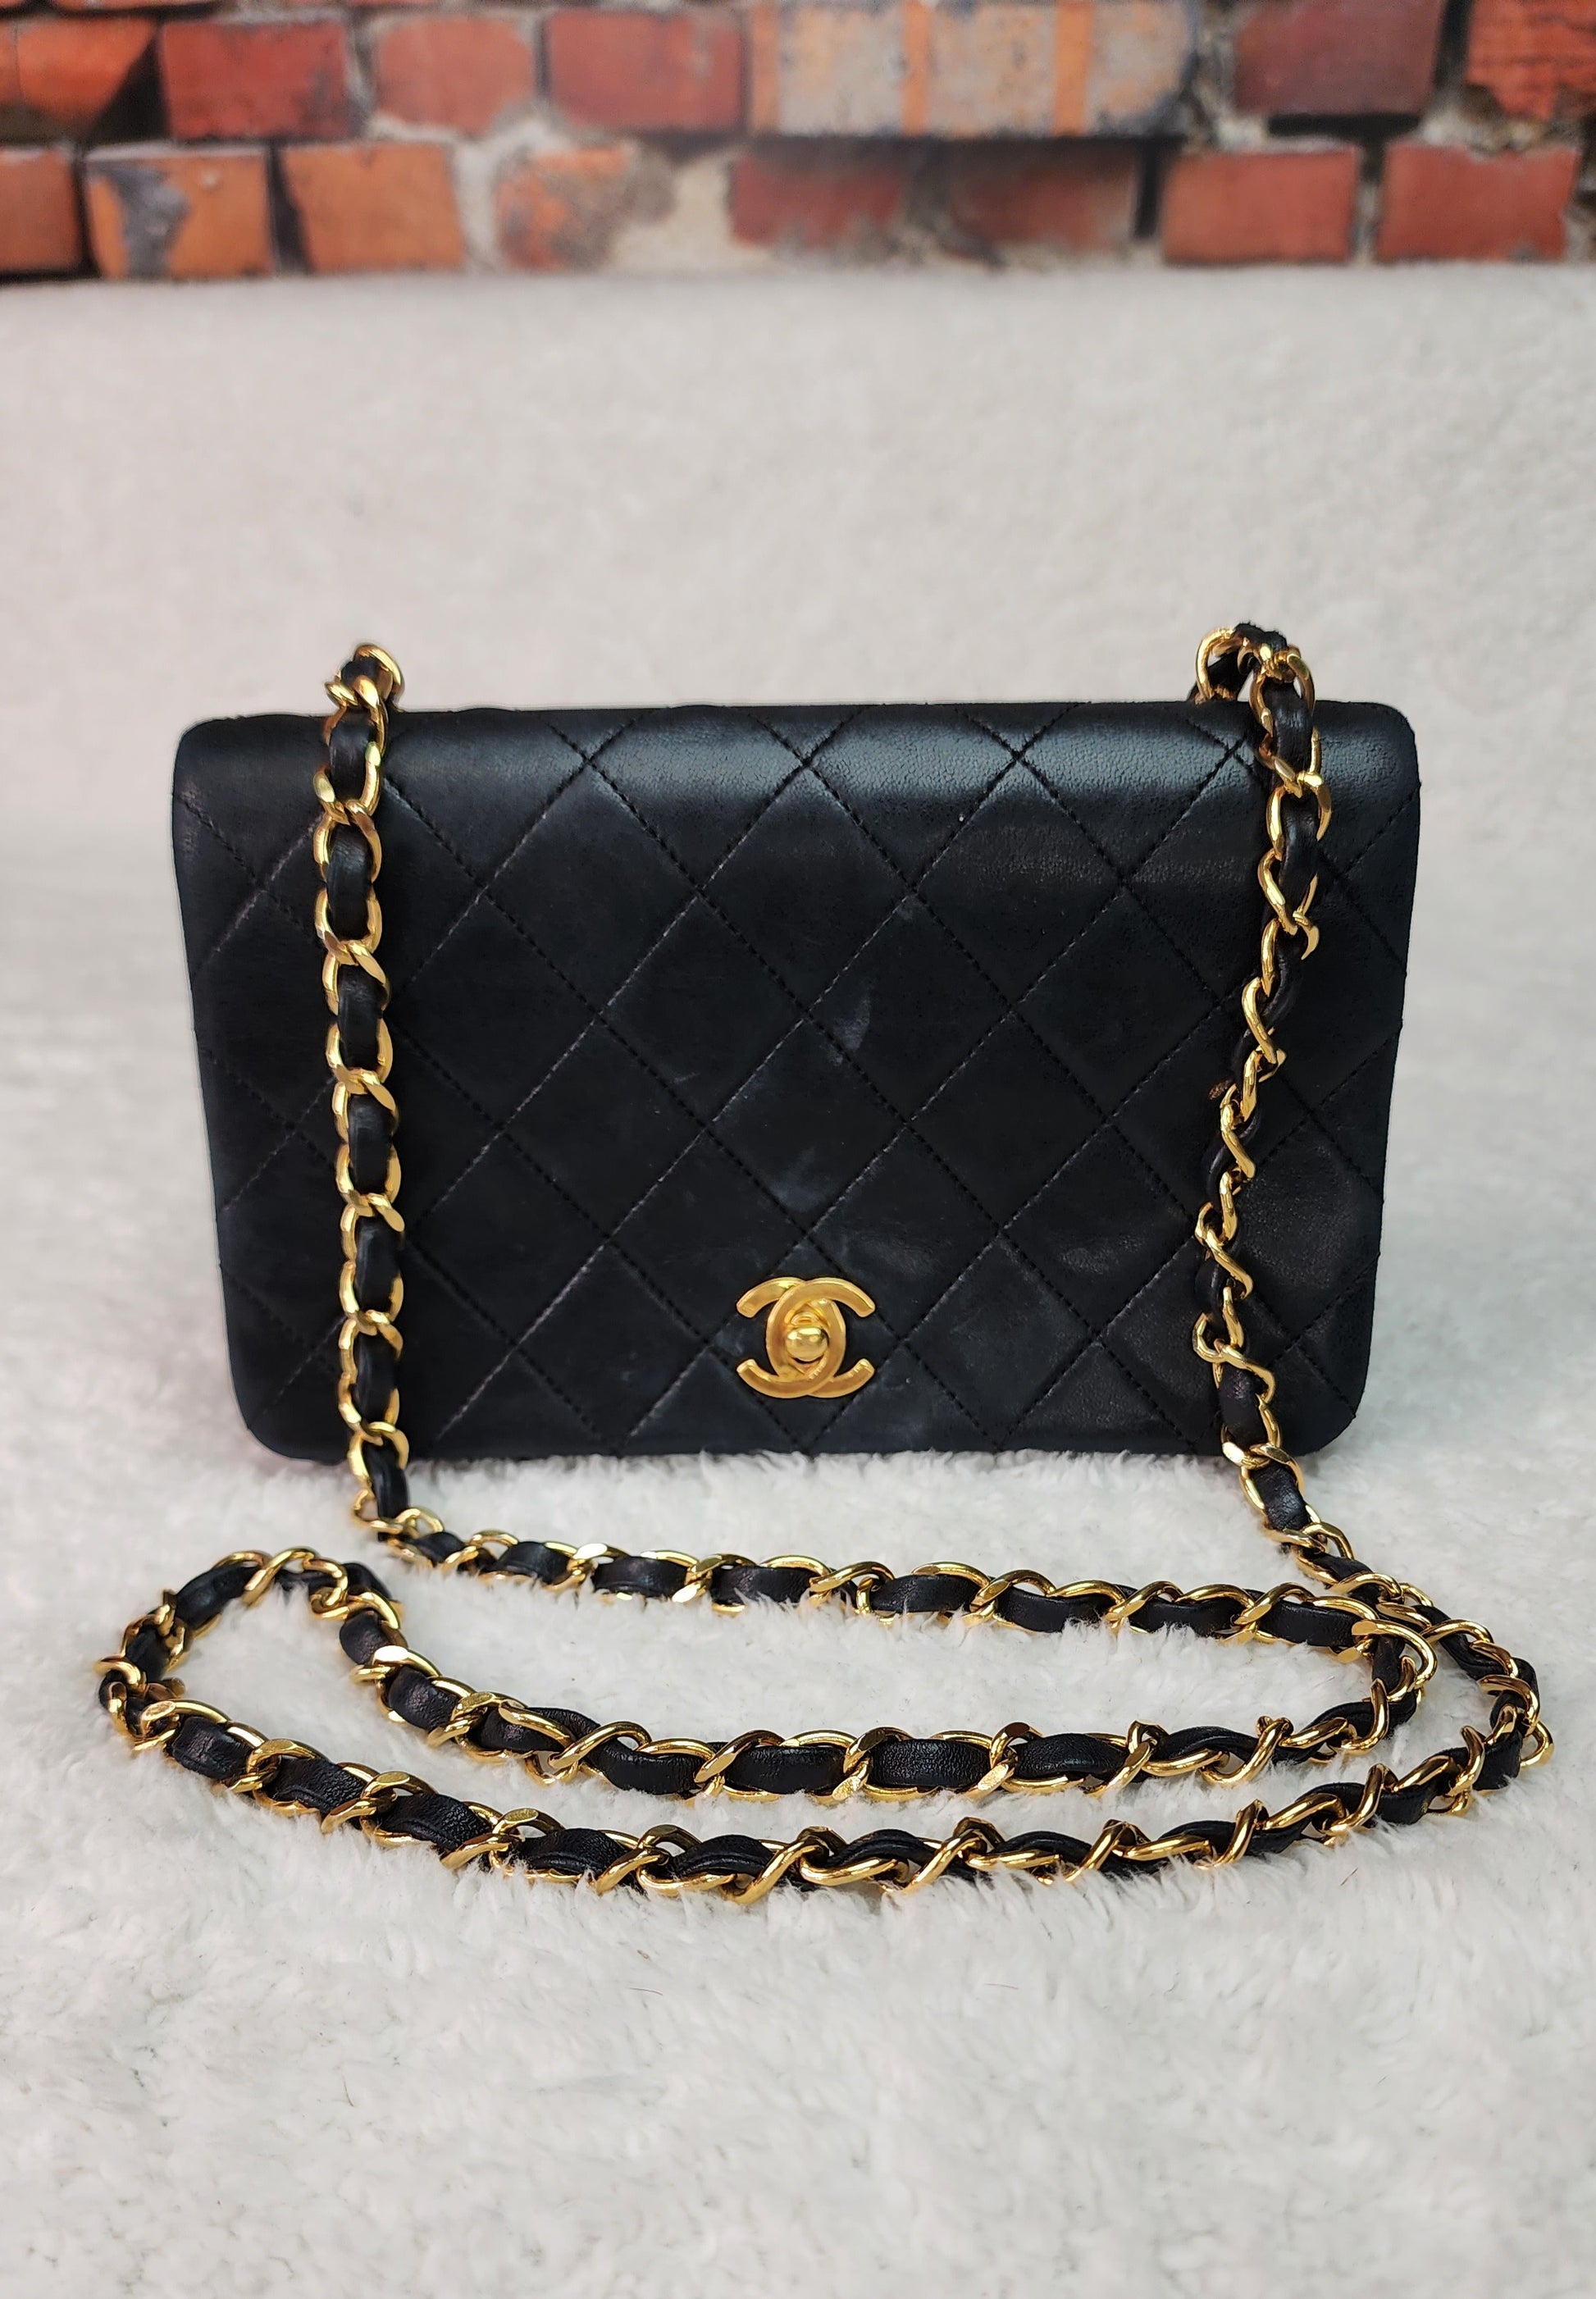 chanel black quilted lambskin handbag